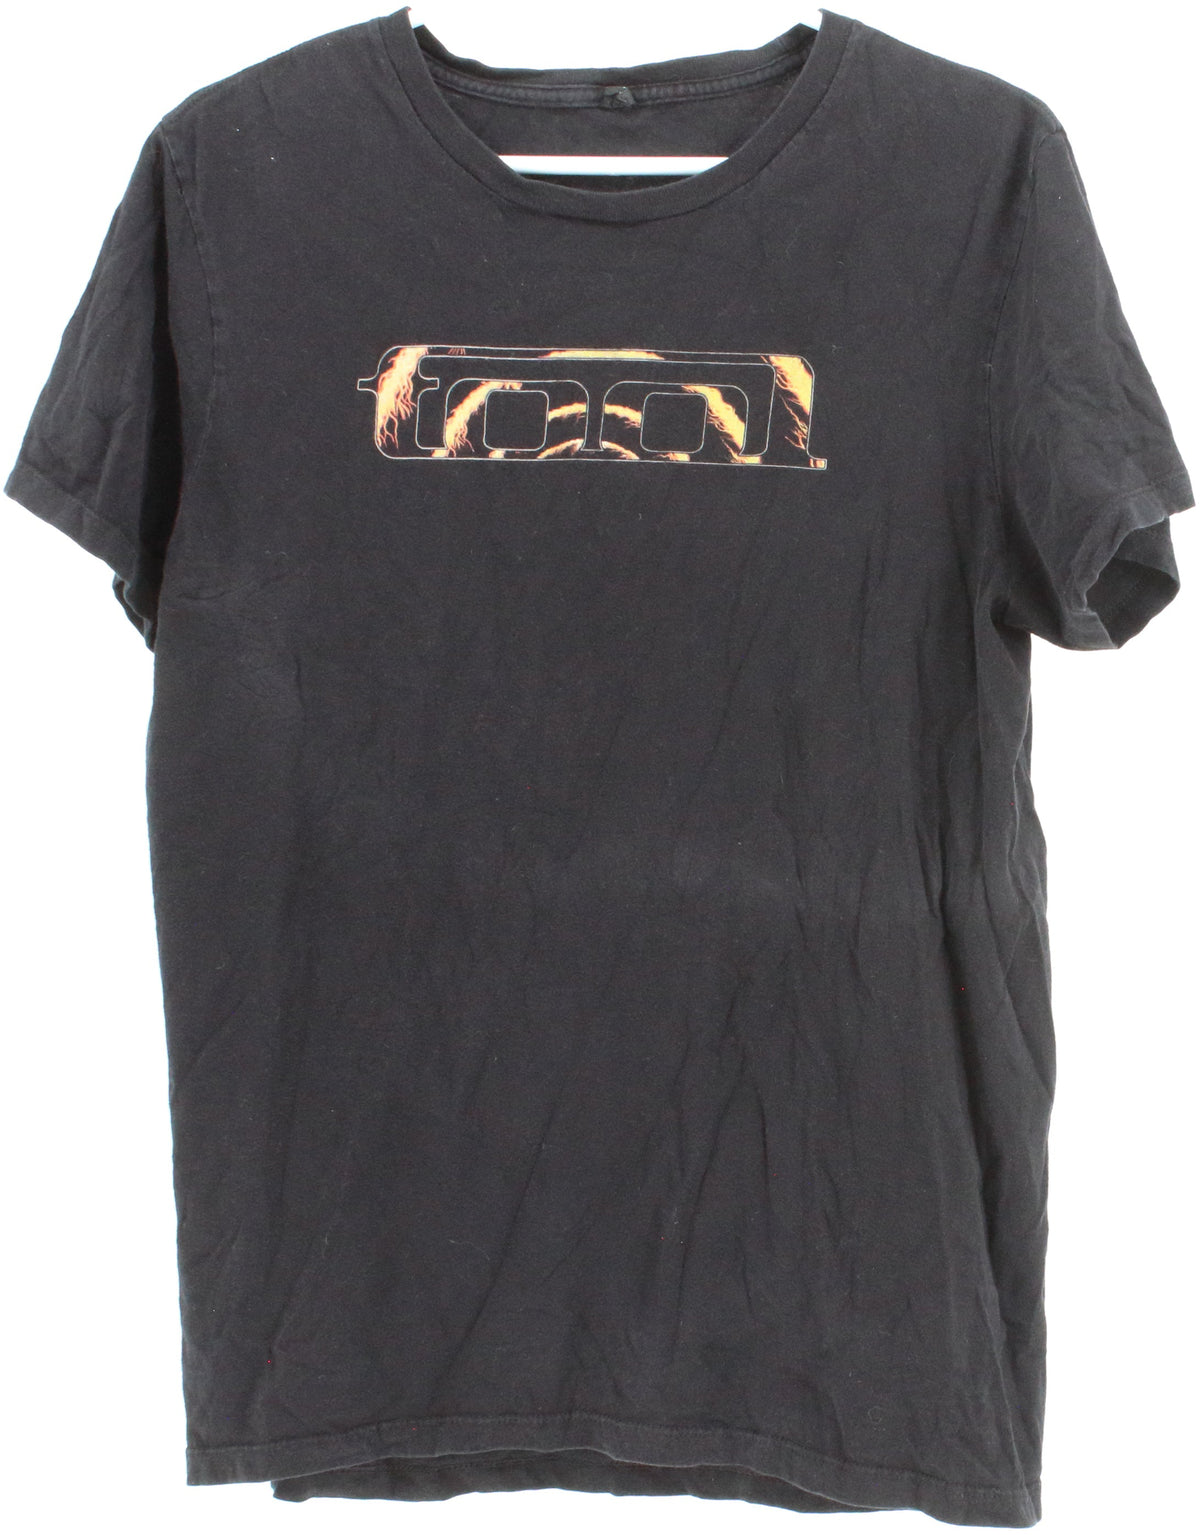 Bay Island Sportswear Front and Back Print Black T-Shirt